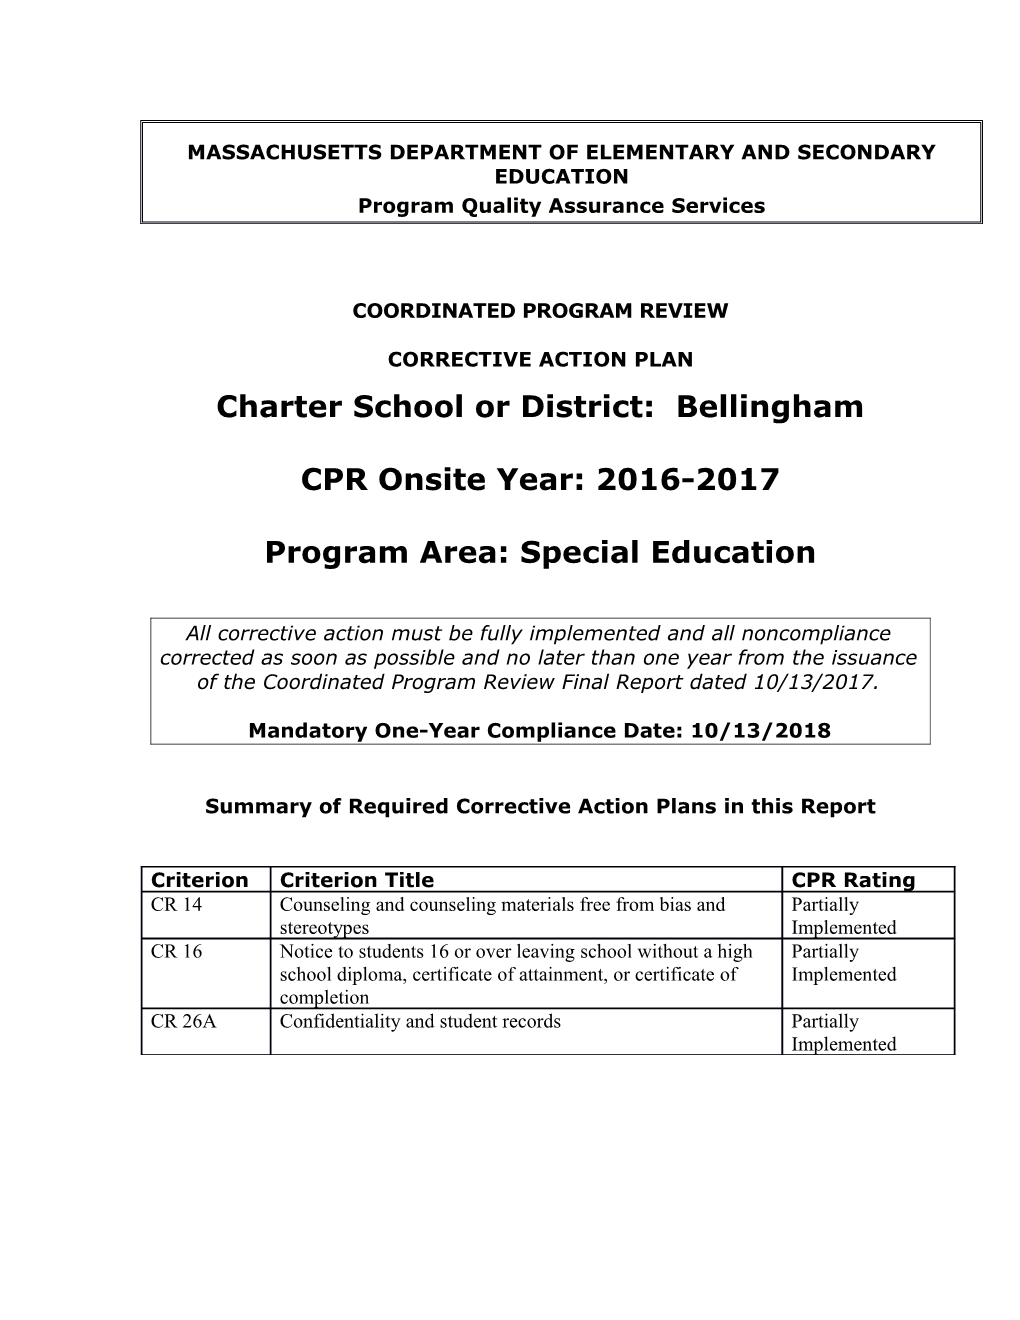 Bellingham Public Schools CAP 2017